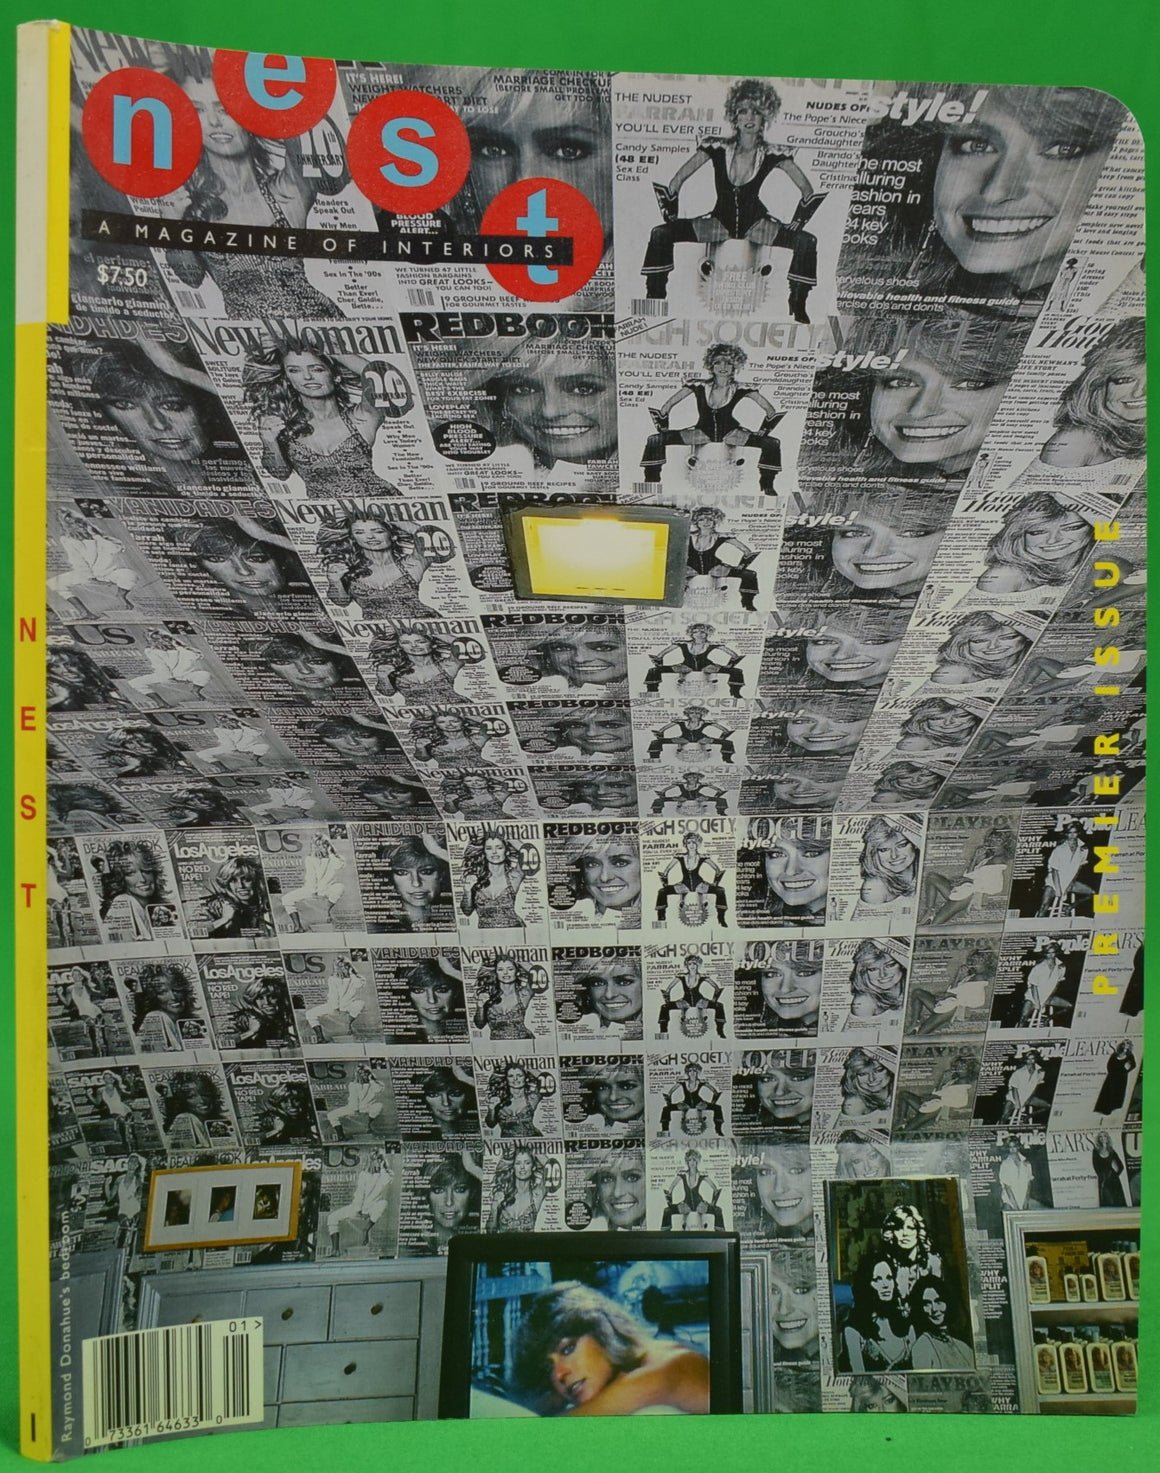 "Nest A Magazine Of Interiors 1997 Premier Issue #1" HOLTZMAN, Joseph (SOLD)